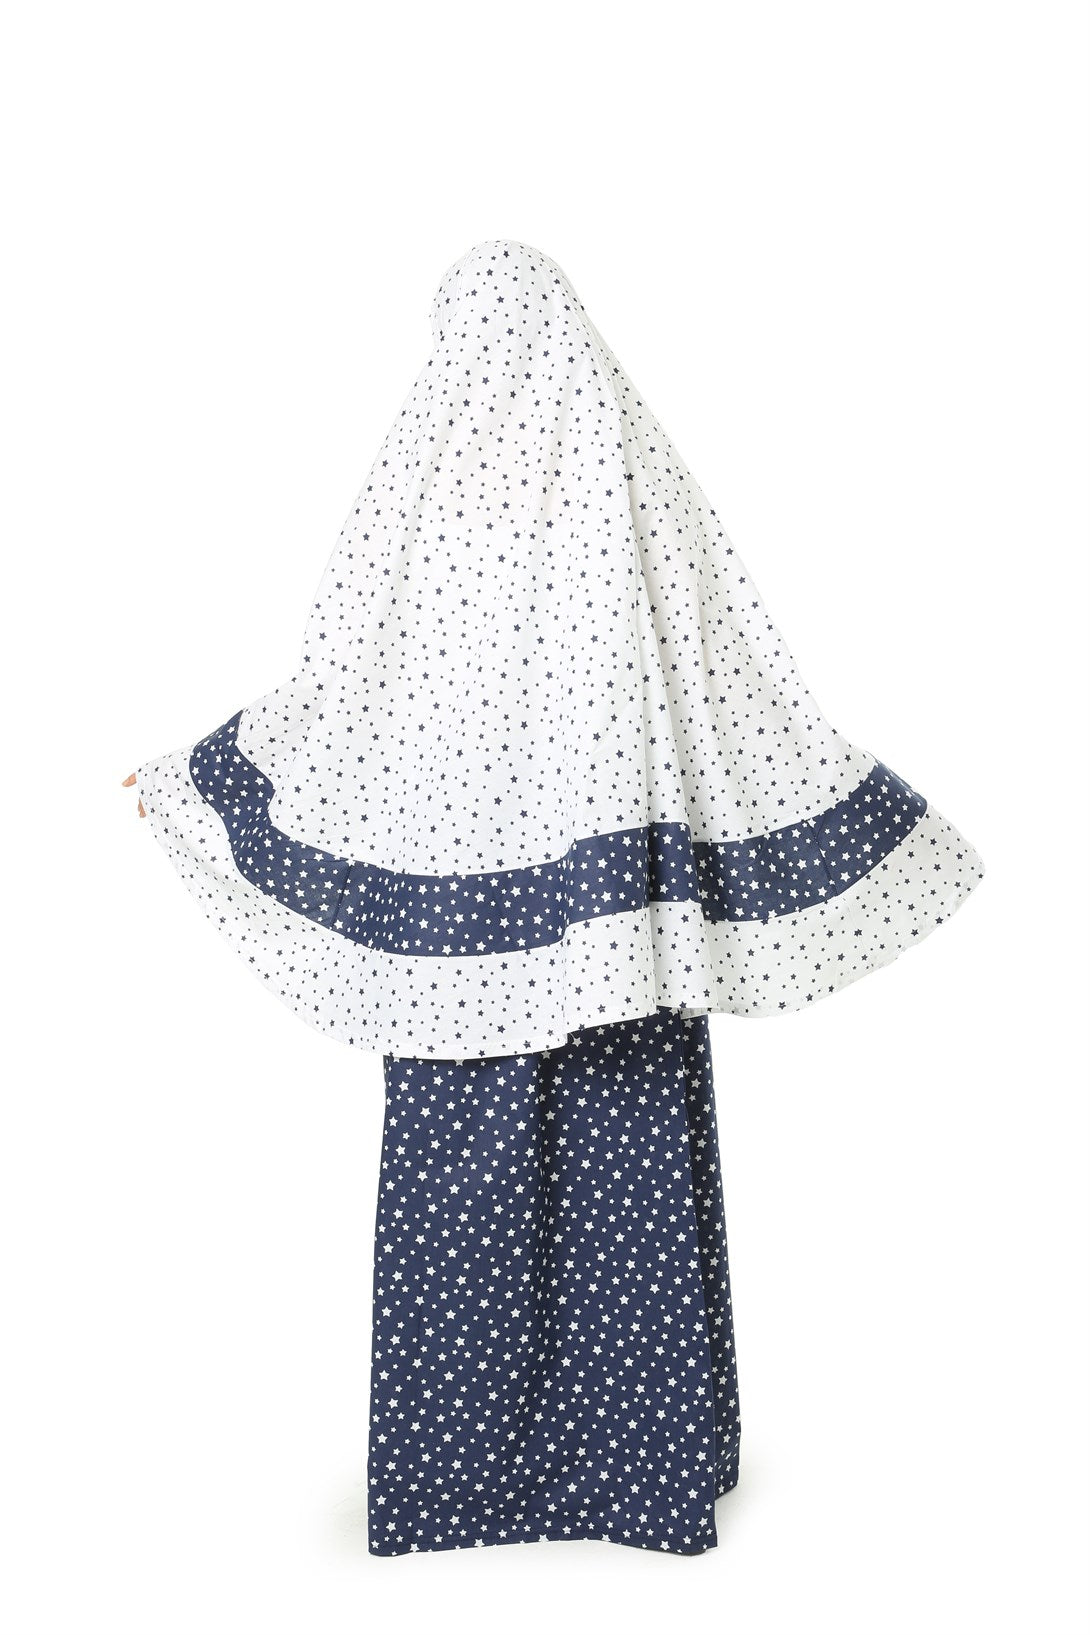 Women's Prayer Dress Mint Color Star Printed Belt Pattern